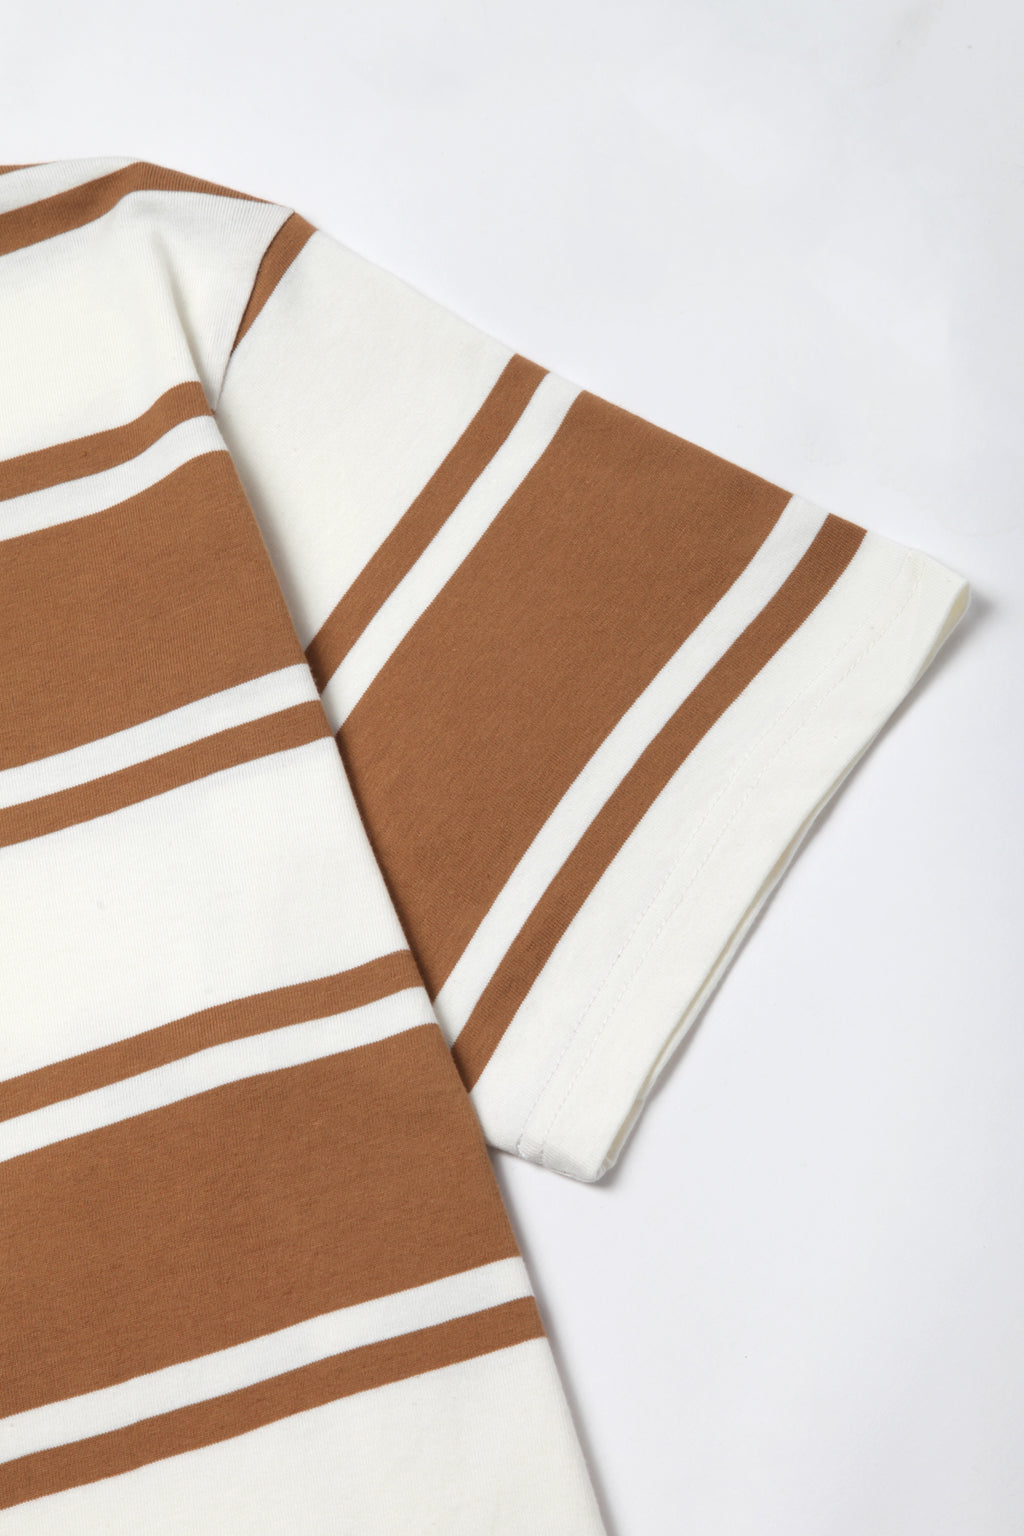 Okonkwo MFG - Short Sleeve Striped Tee - Brown/White